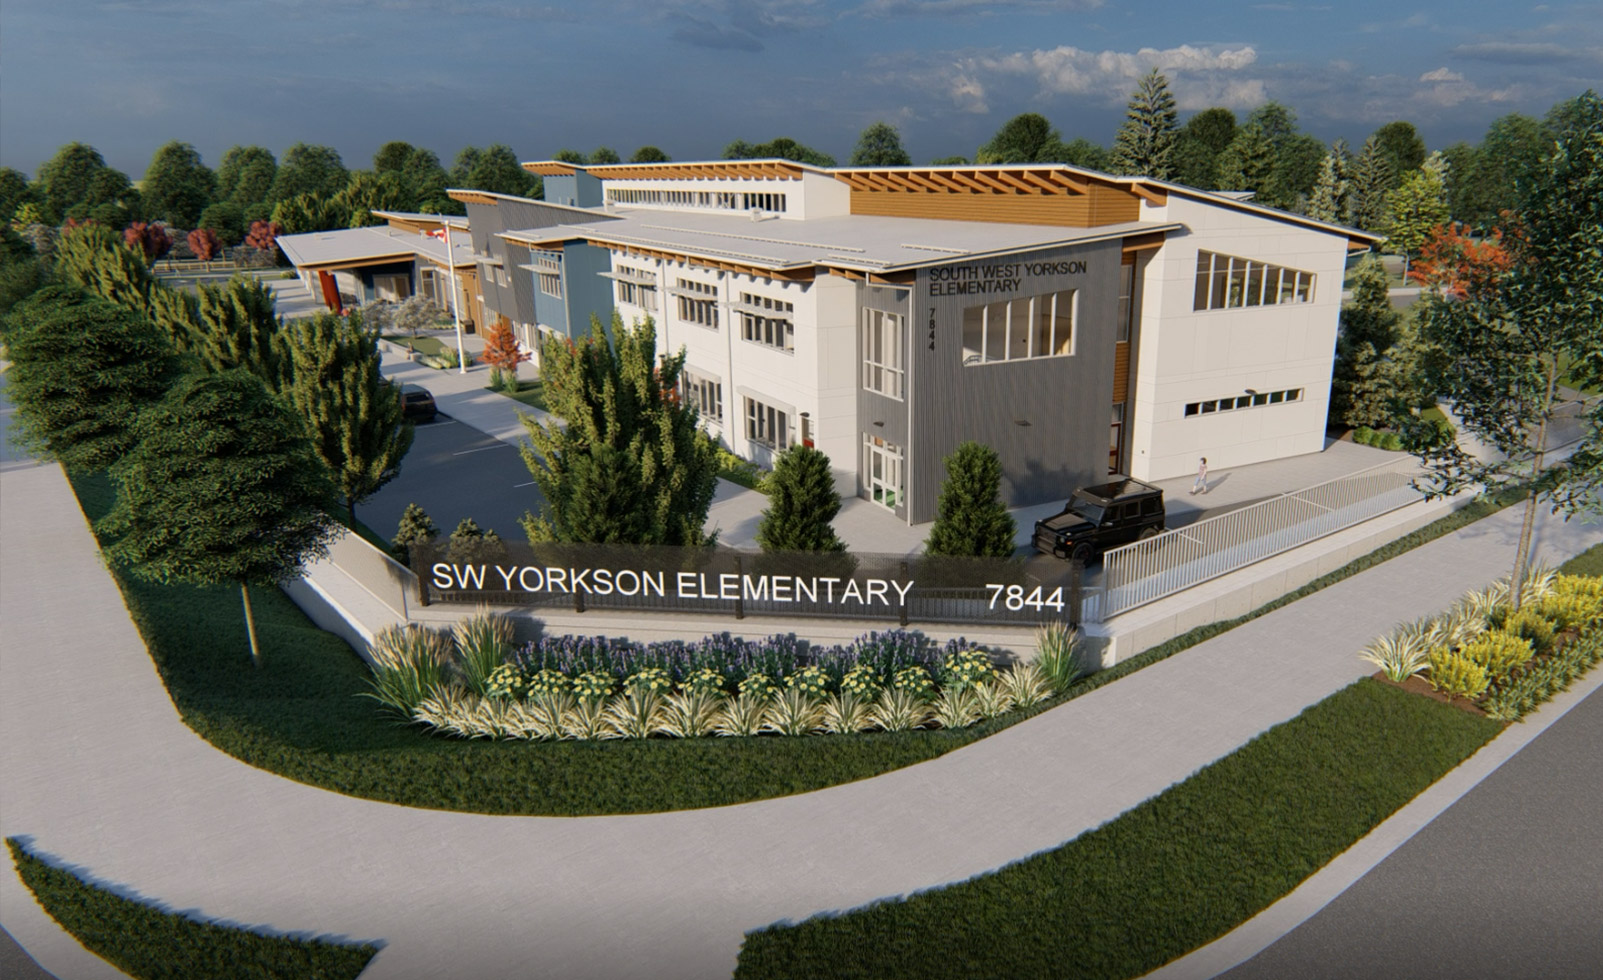 south west yorkson elementary school